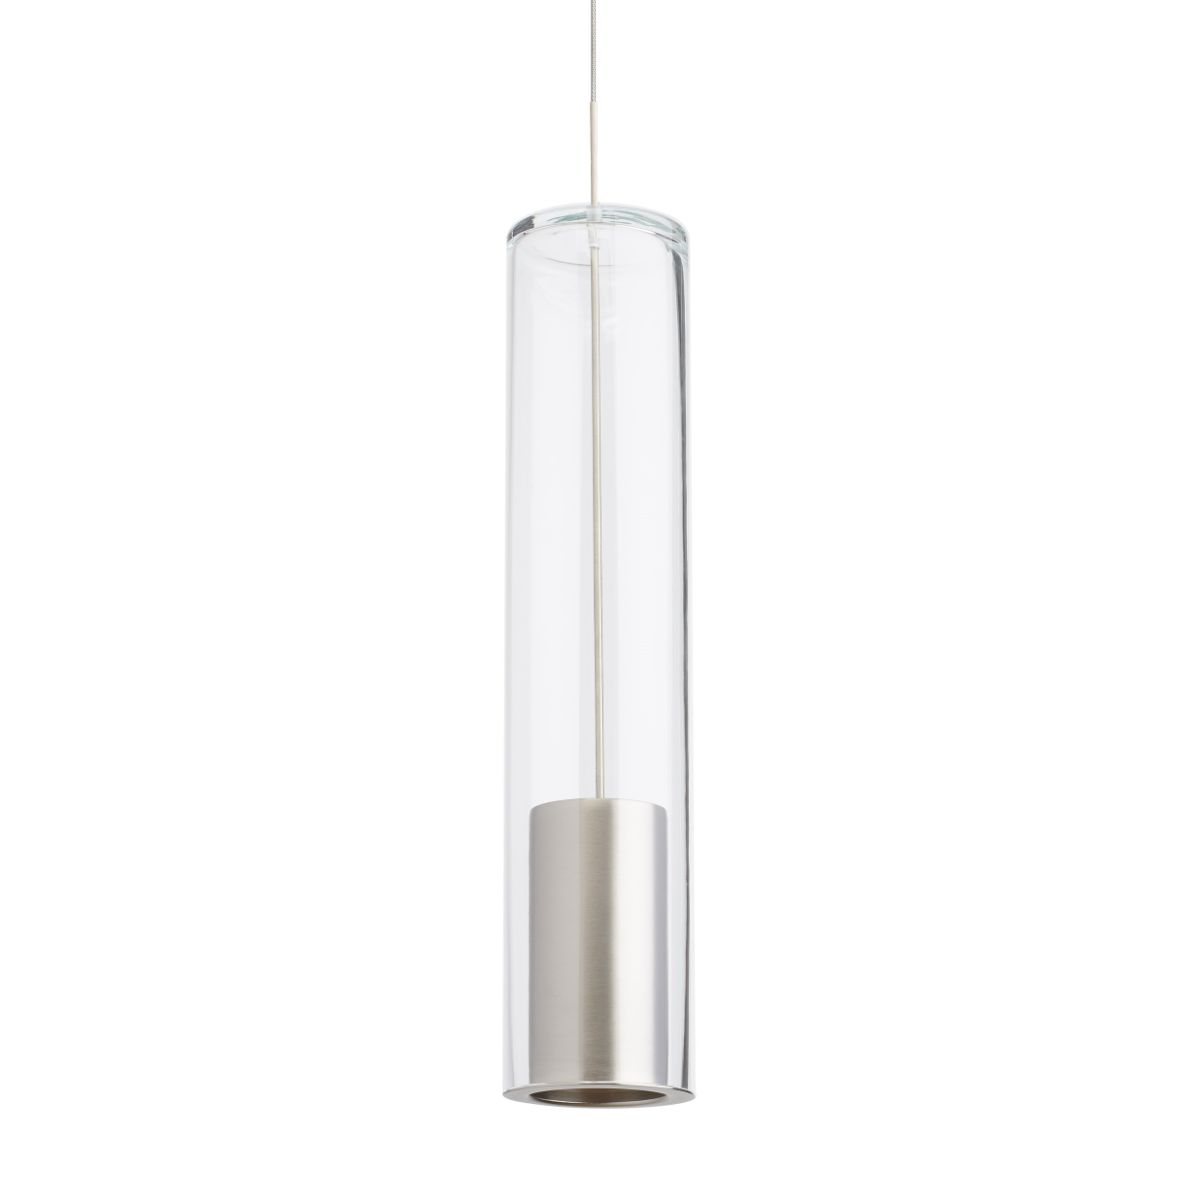 Captra Monorail Cylinder LED Pendant Light 485 Lumens Brass Finish - Bees Lighting